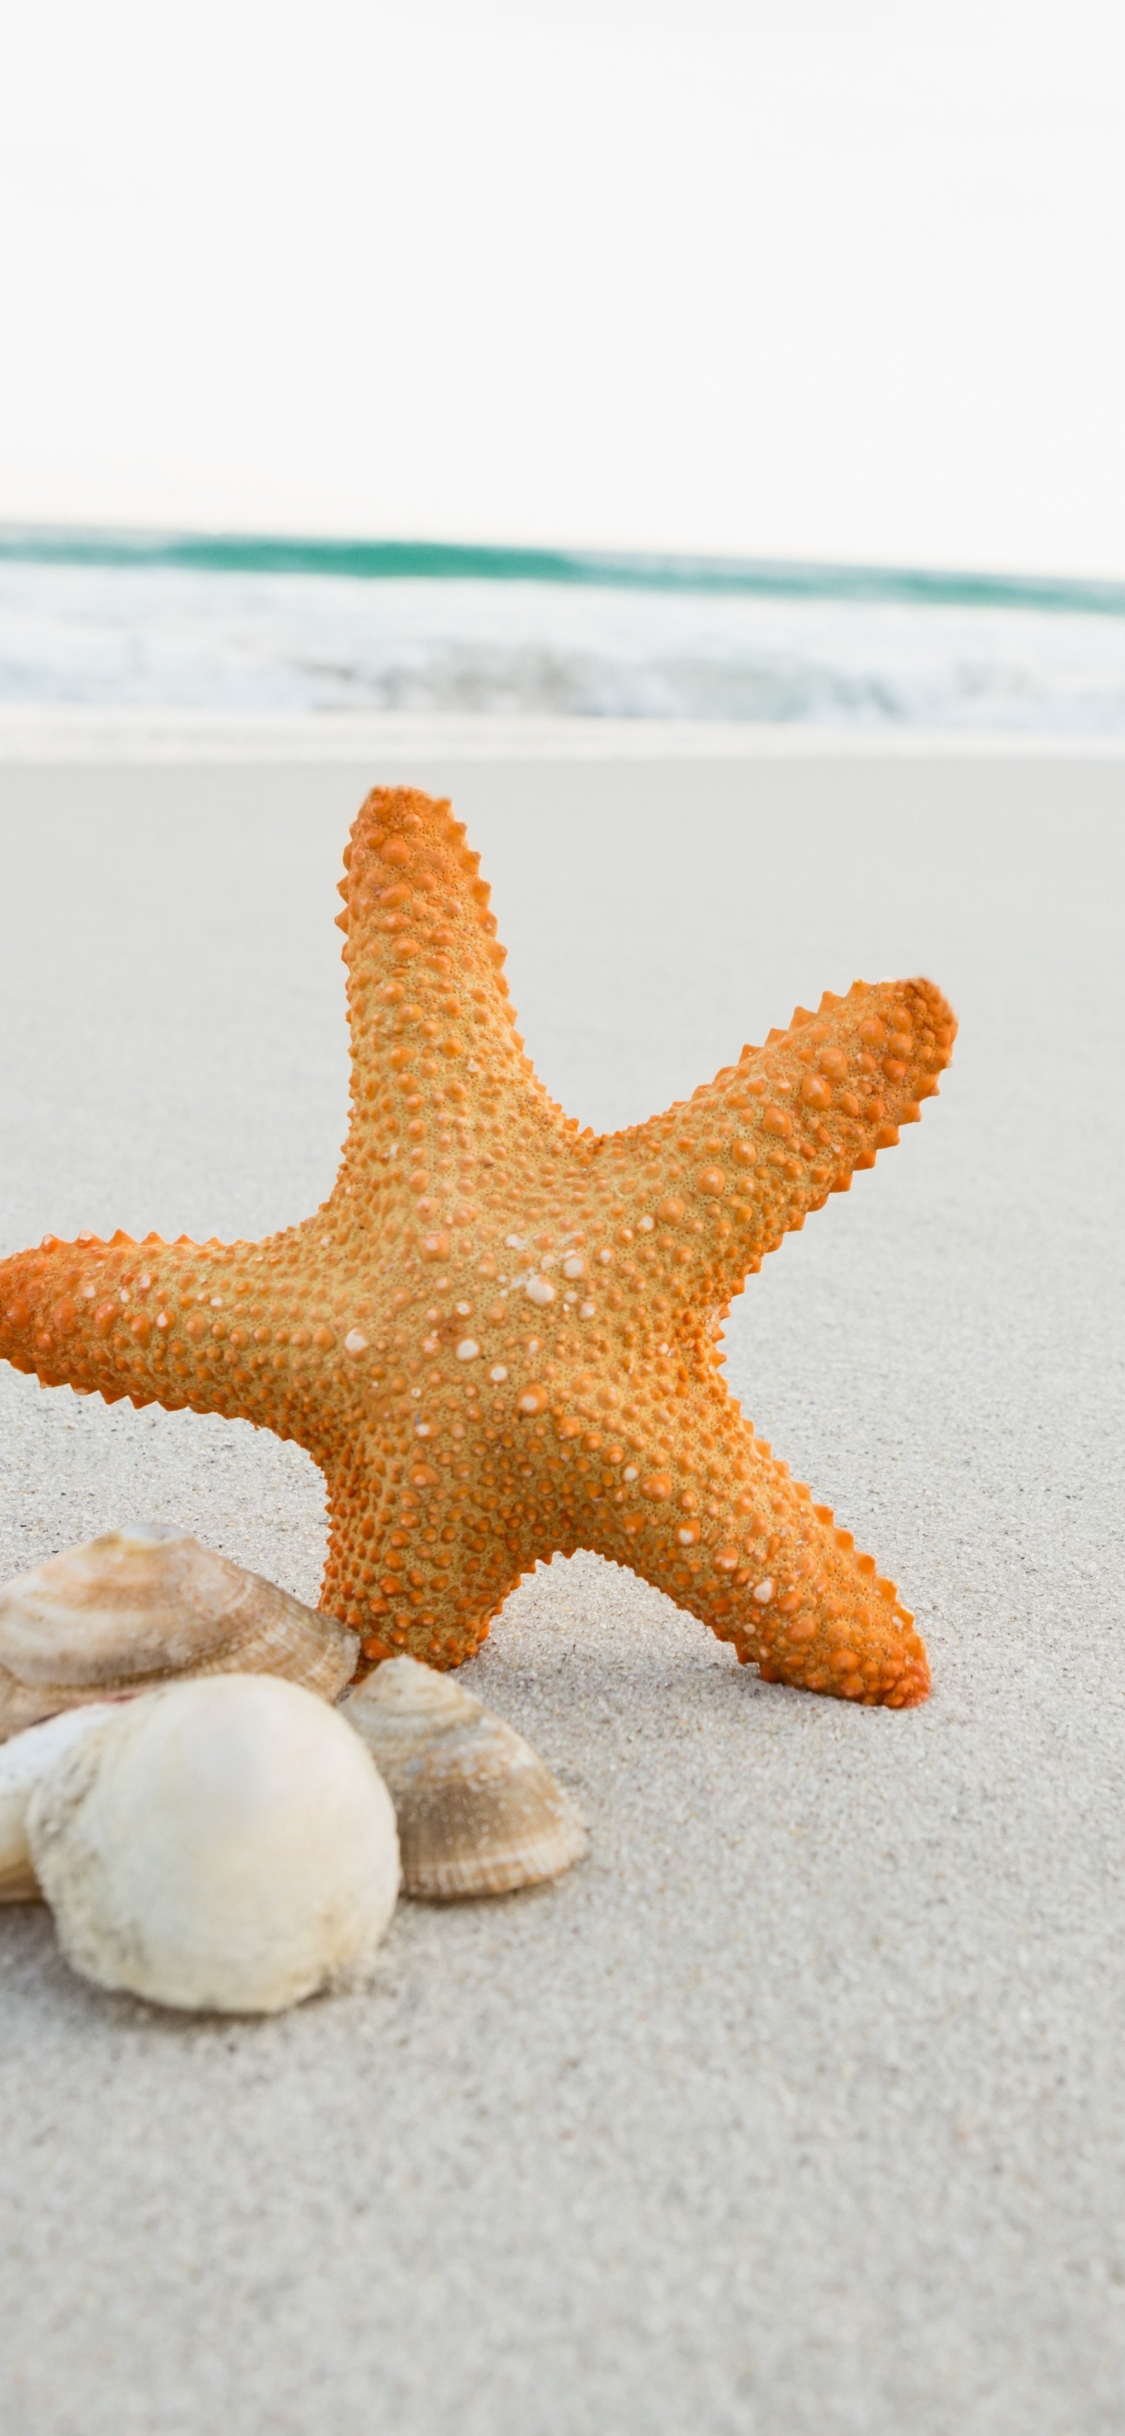 1125x2436 Download seashell, starfish, sand, beach wallpaper, iphone x, hd image, background, 5010